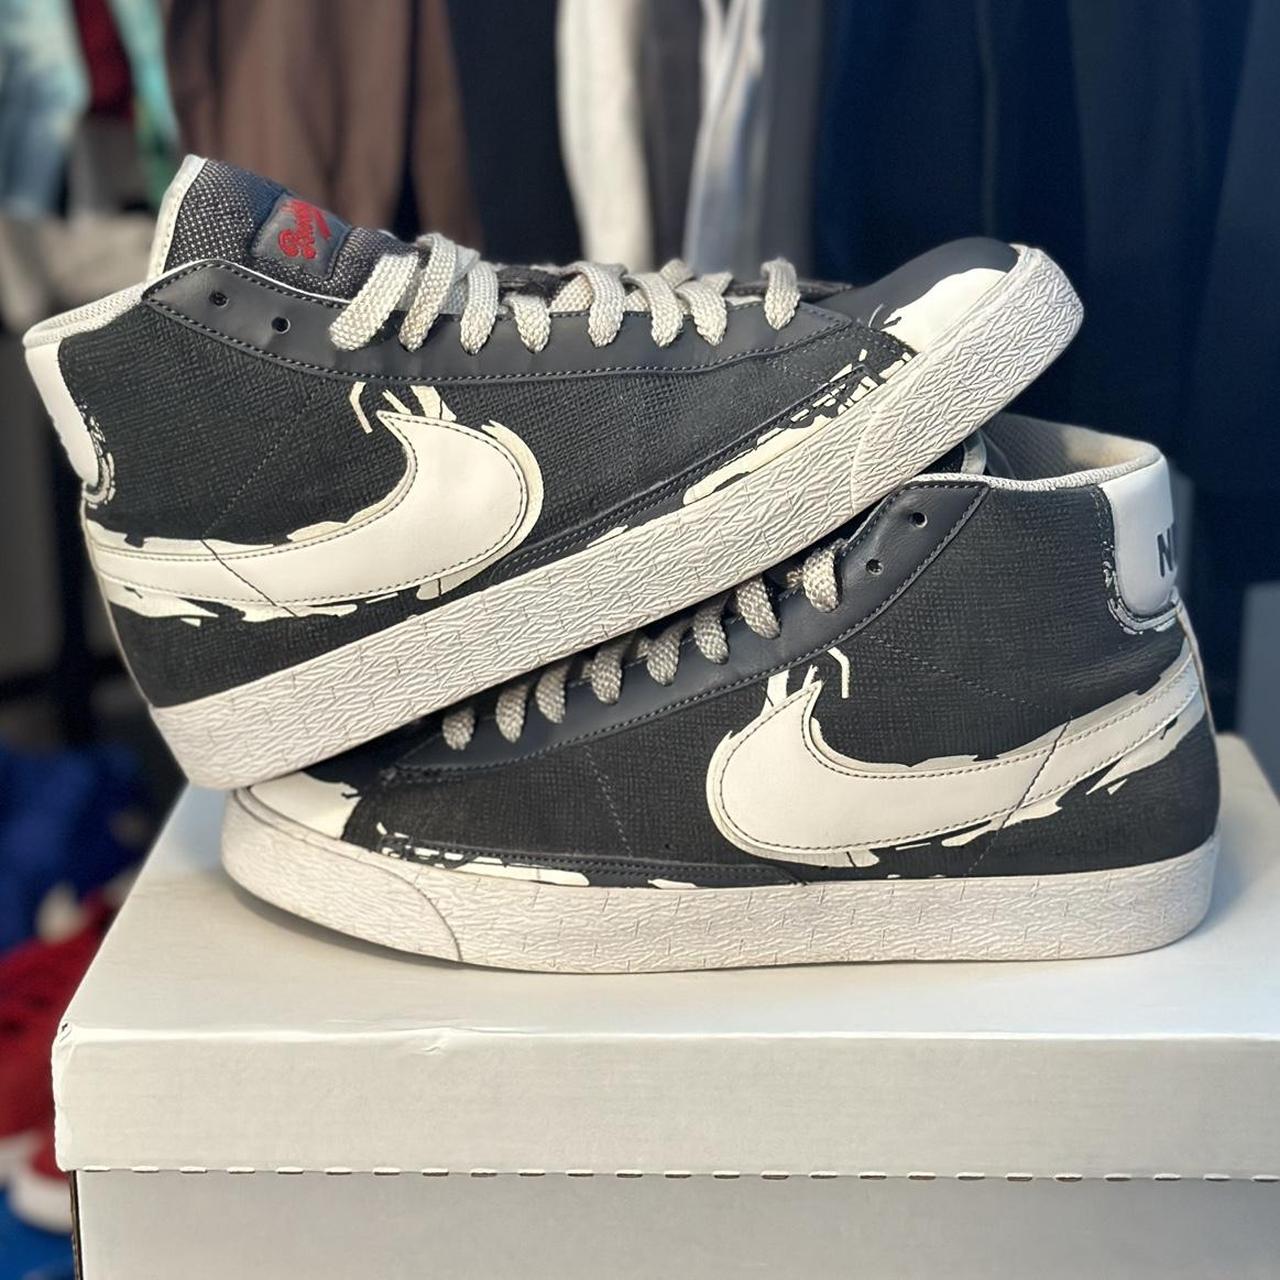 Nike Men's Sneakers - Grey - US 9.5